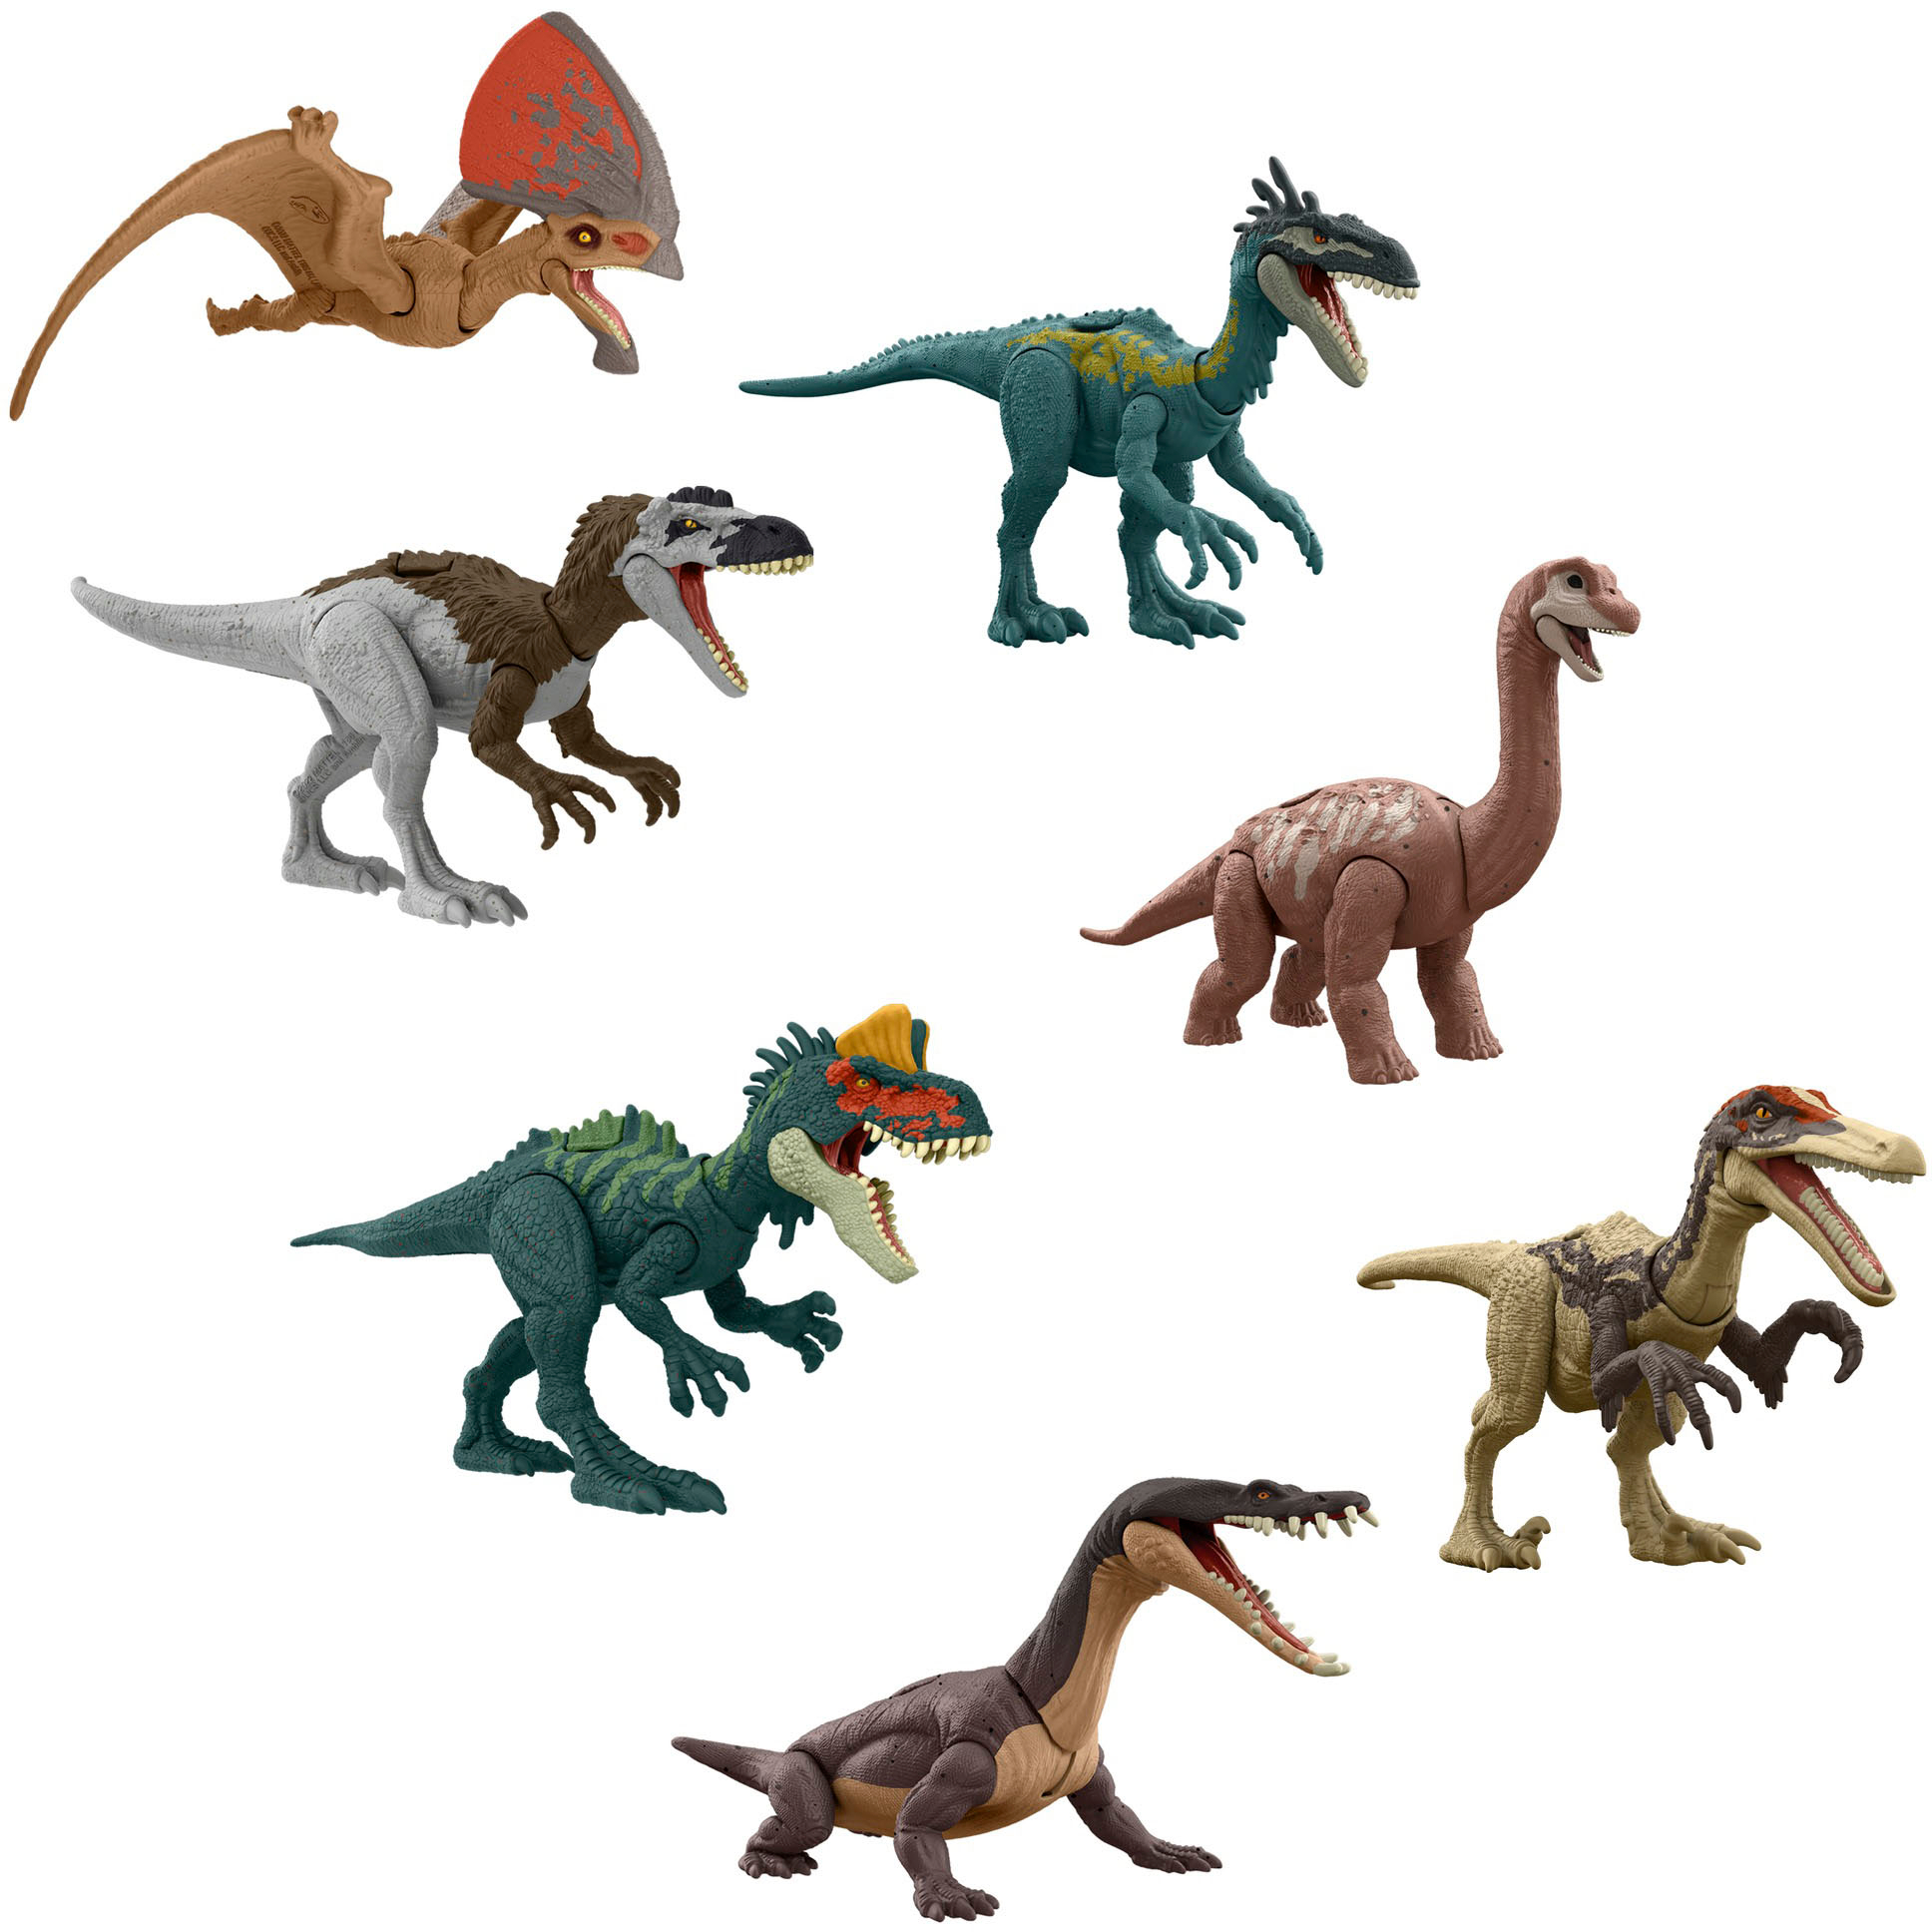 Dinosaur Park Kids Game on the App Store